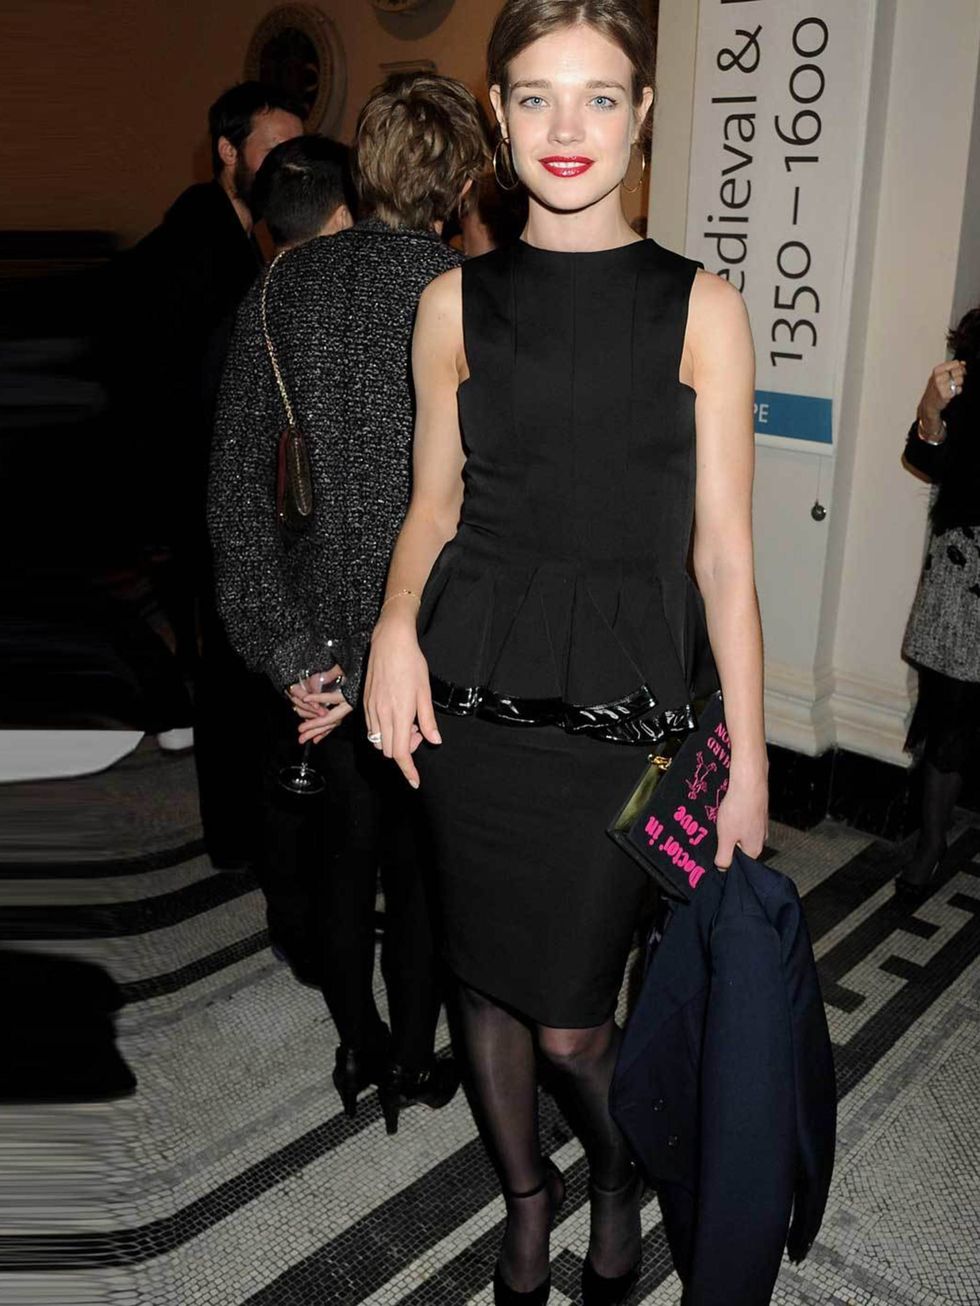 <p><a href="http://www.elleuk.com/star-style/celebrity-style-files/natalia-vodianova">Natalia Vodianova</a> wearing a black pelum cocktail dress at the V&amp;A's Design Fund Gala, March 2012</p>